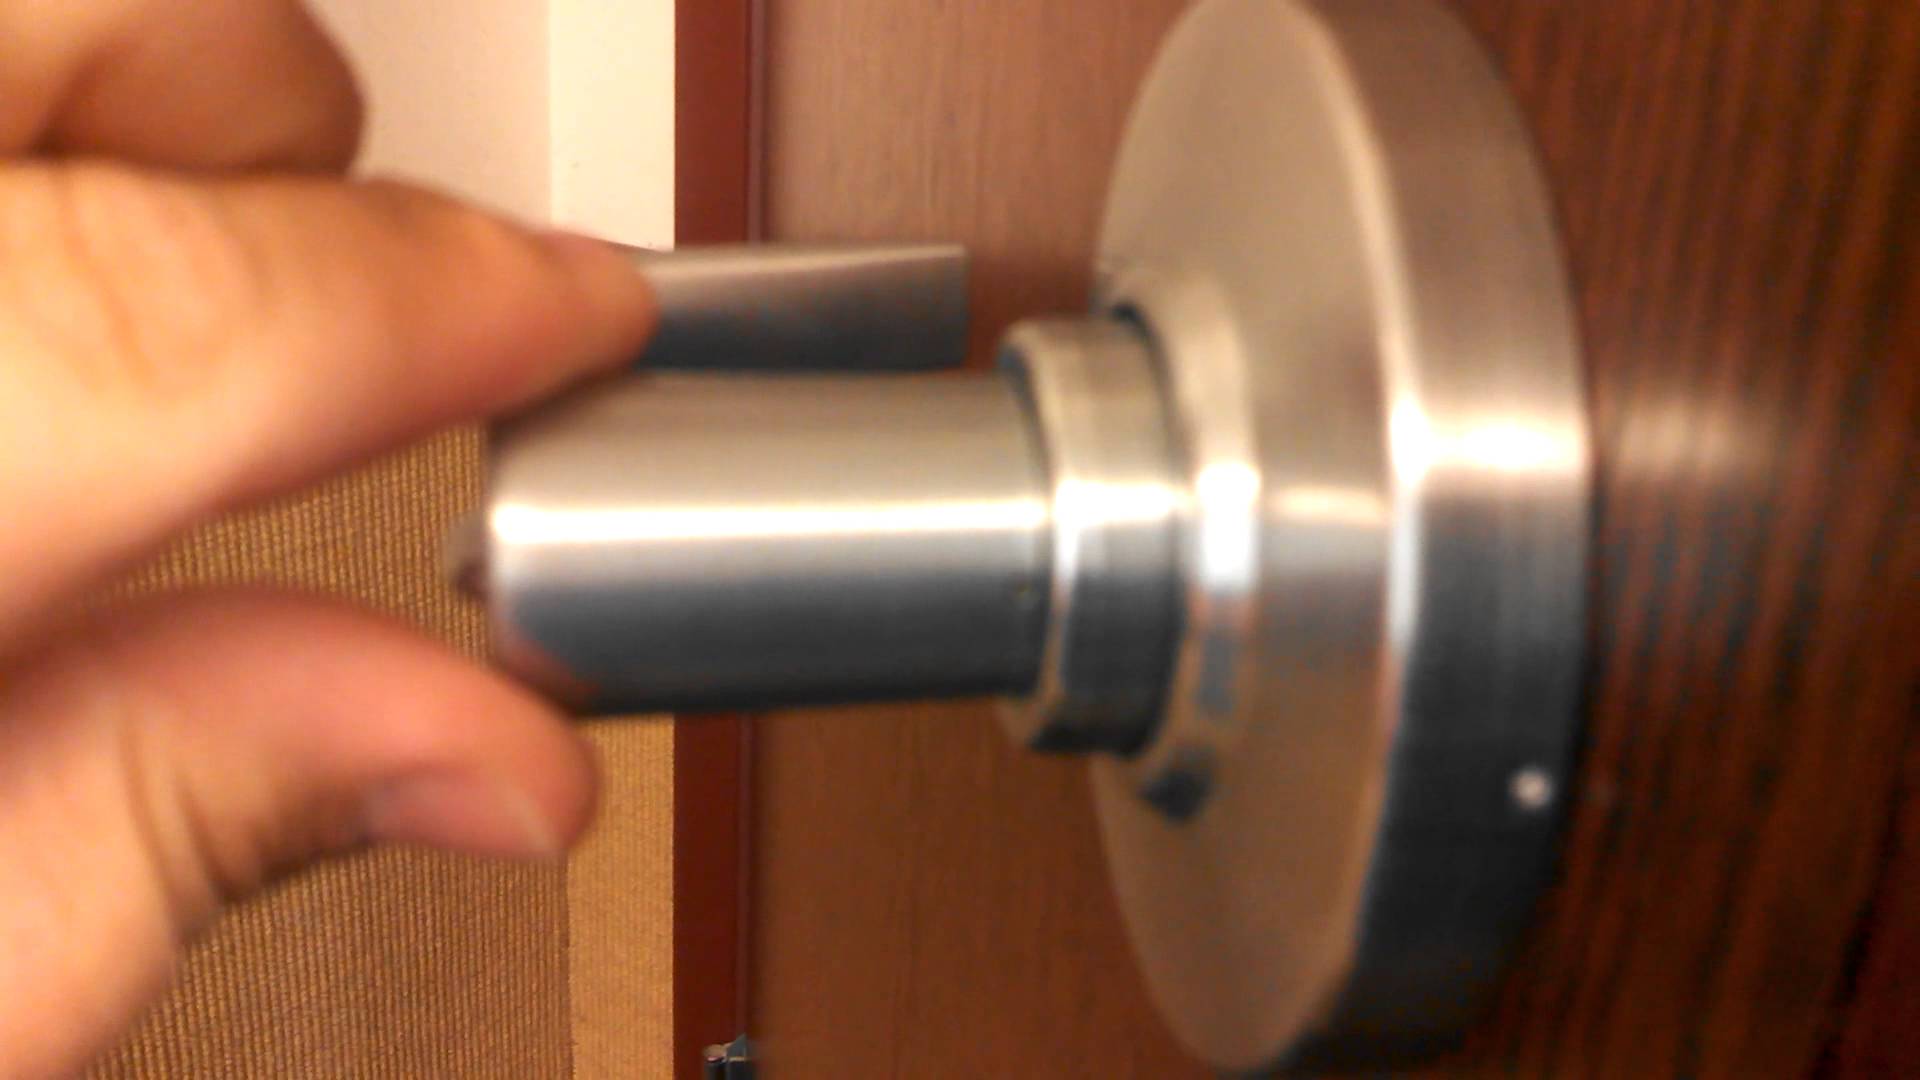 door knob locked from inside photo - 14